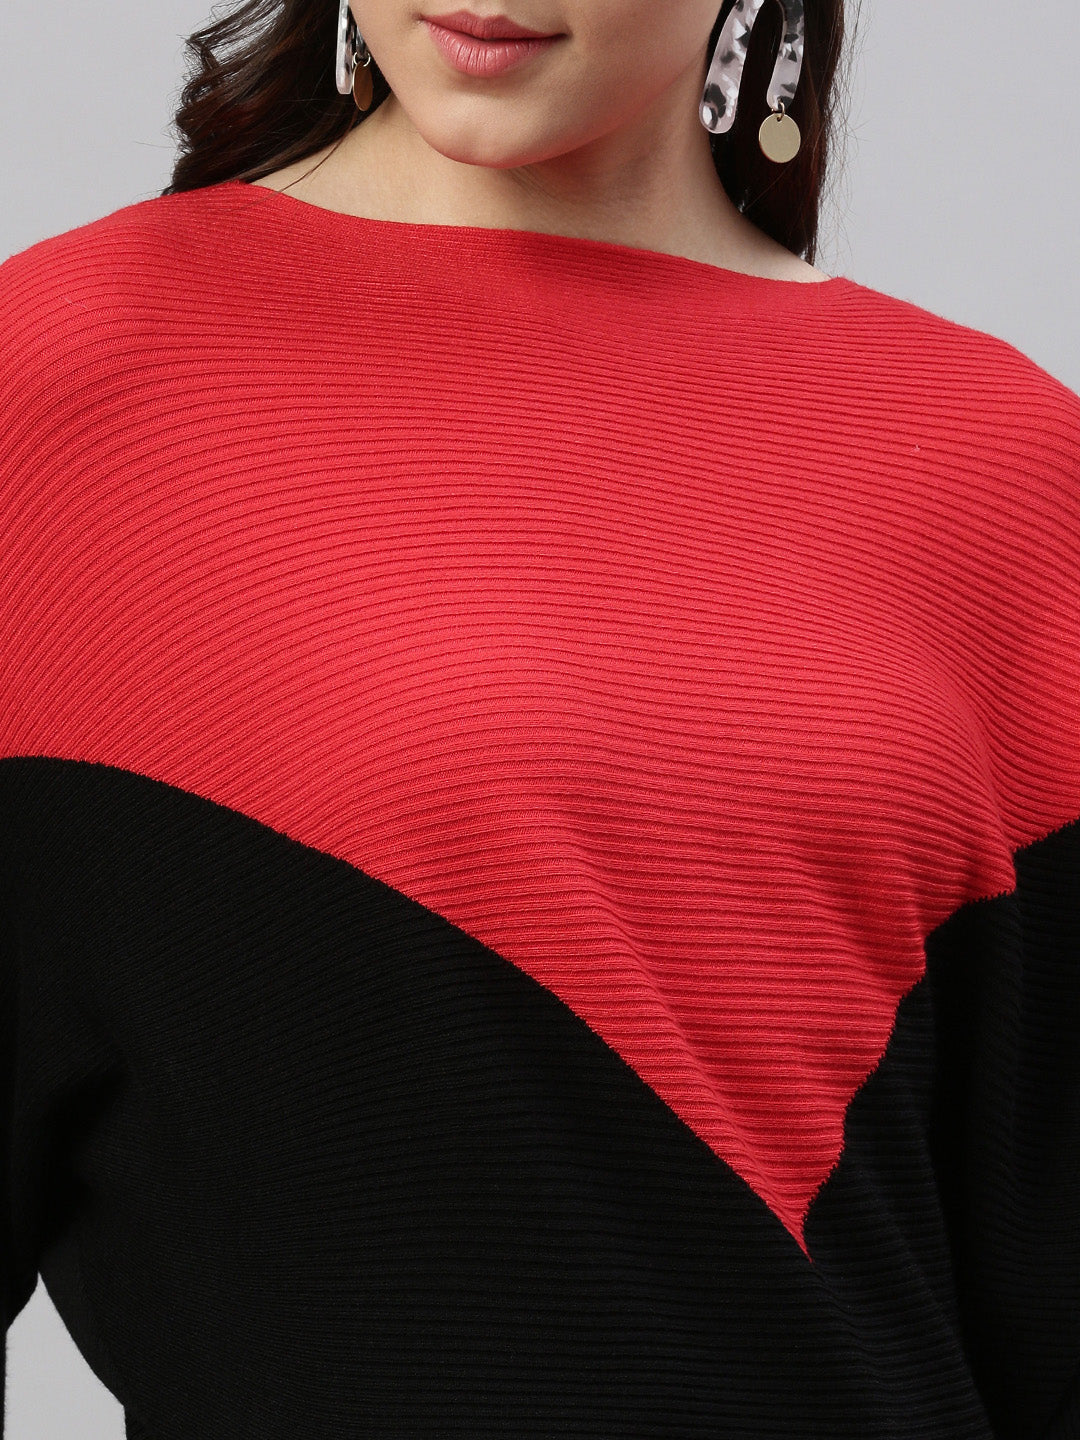 Women Colourblocked Red Top